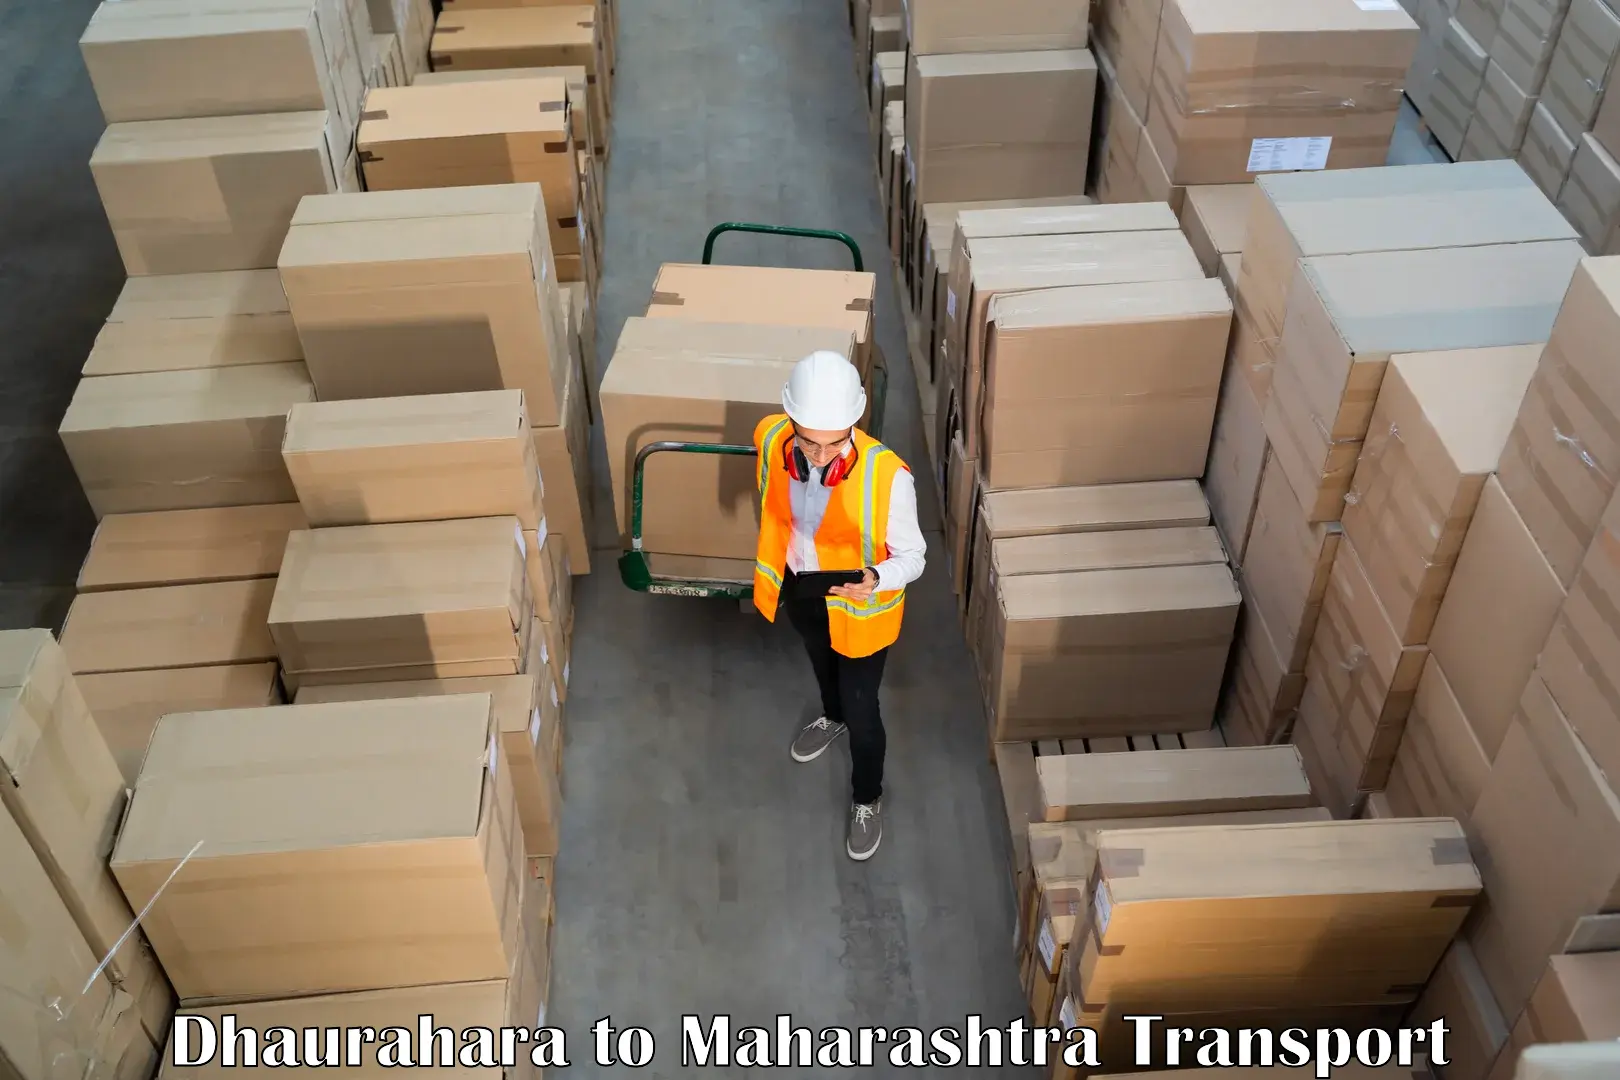 Truck transport companies in India Dhaurahara to Daryapur